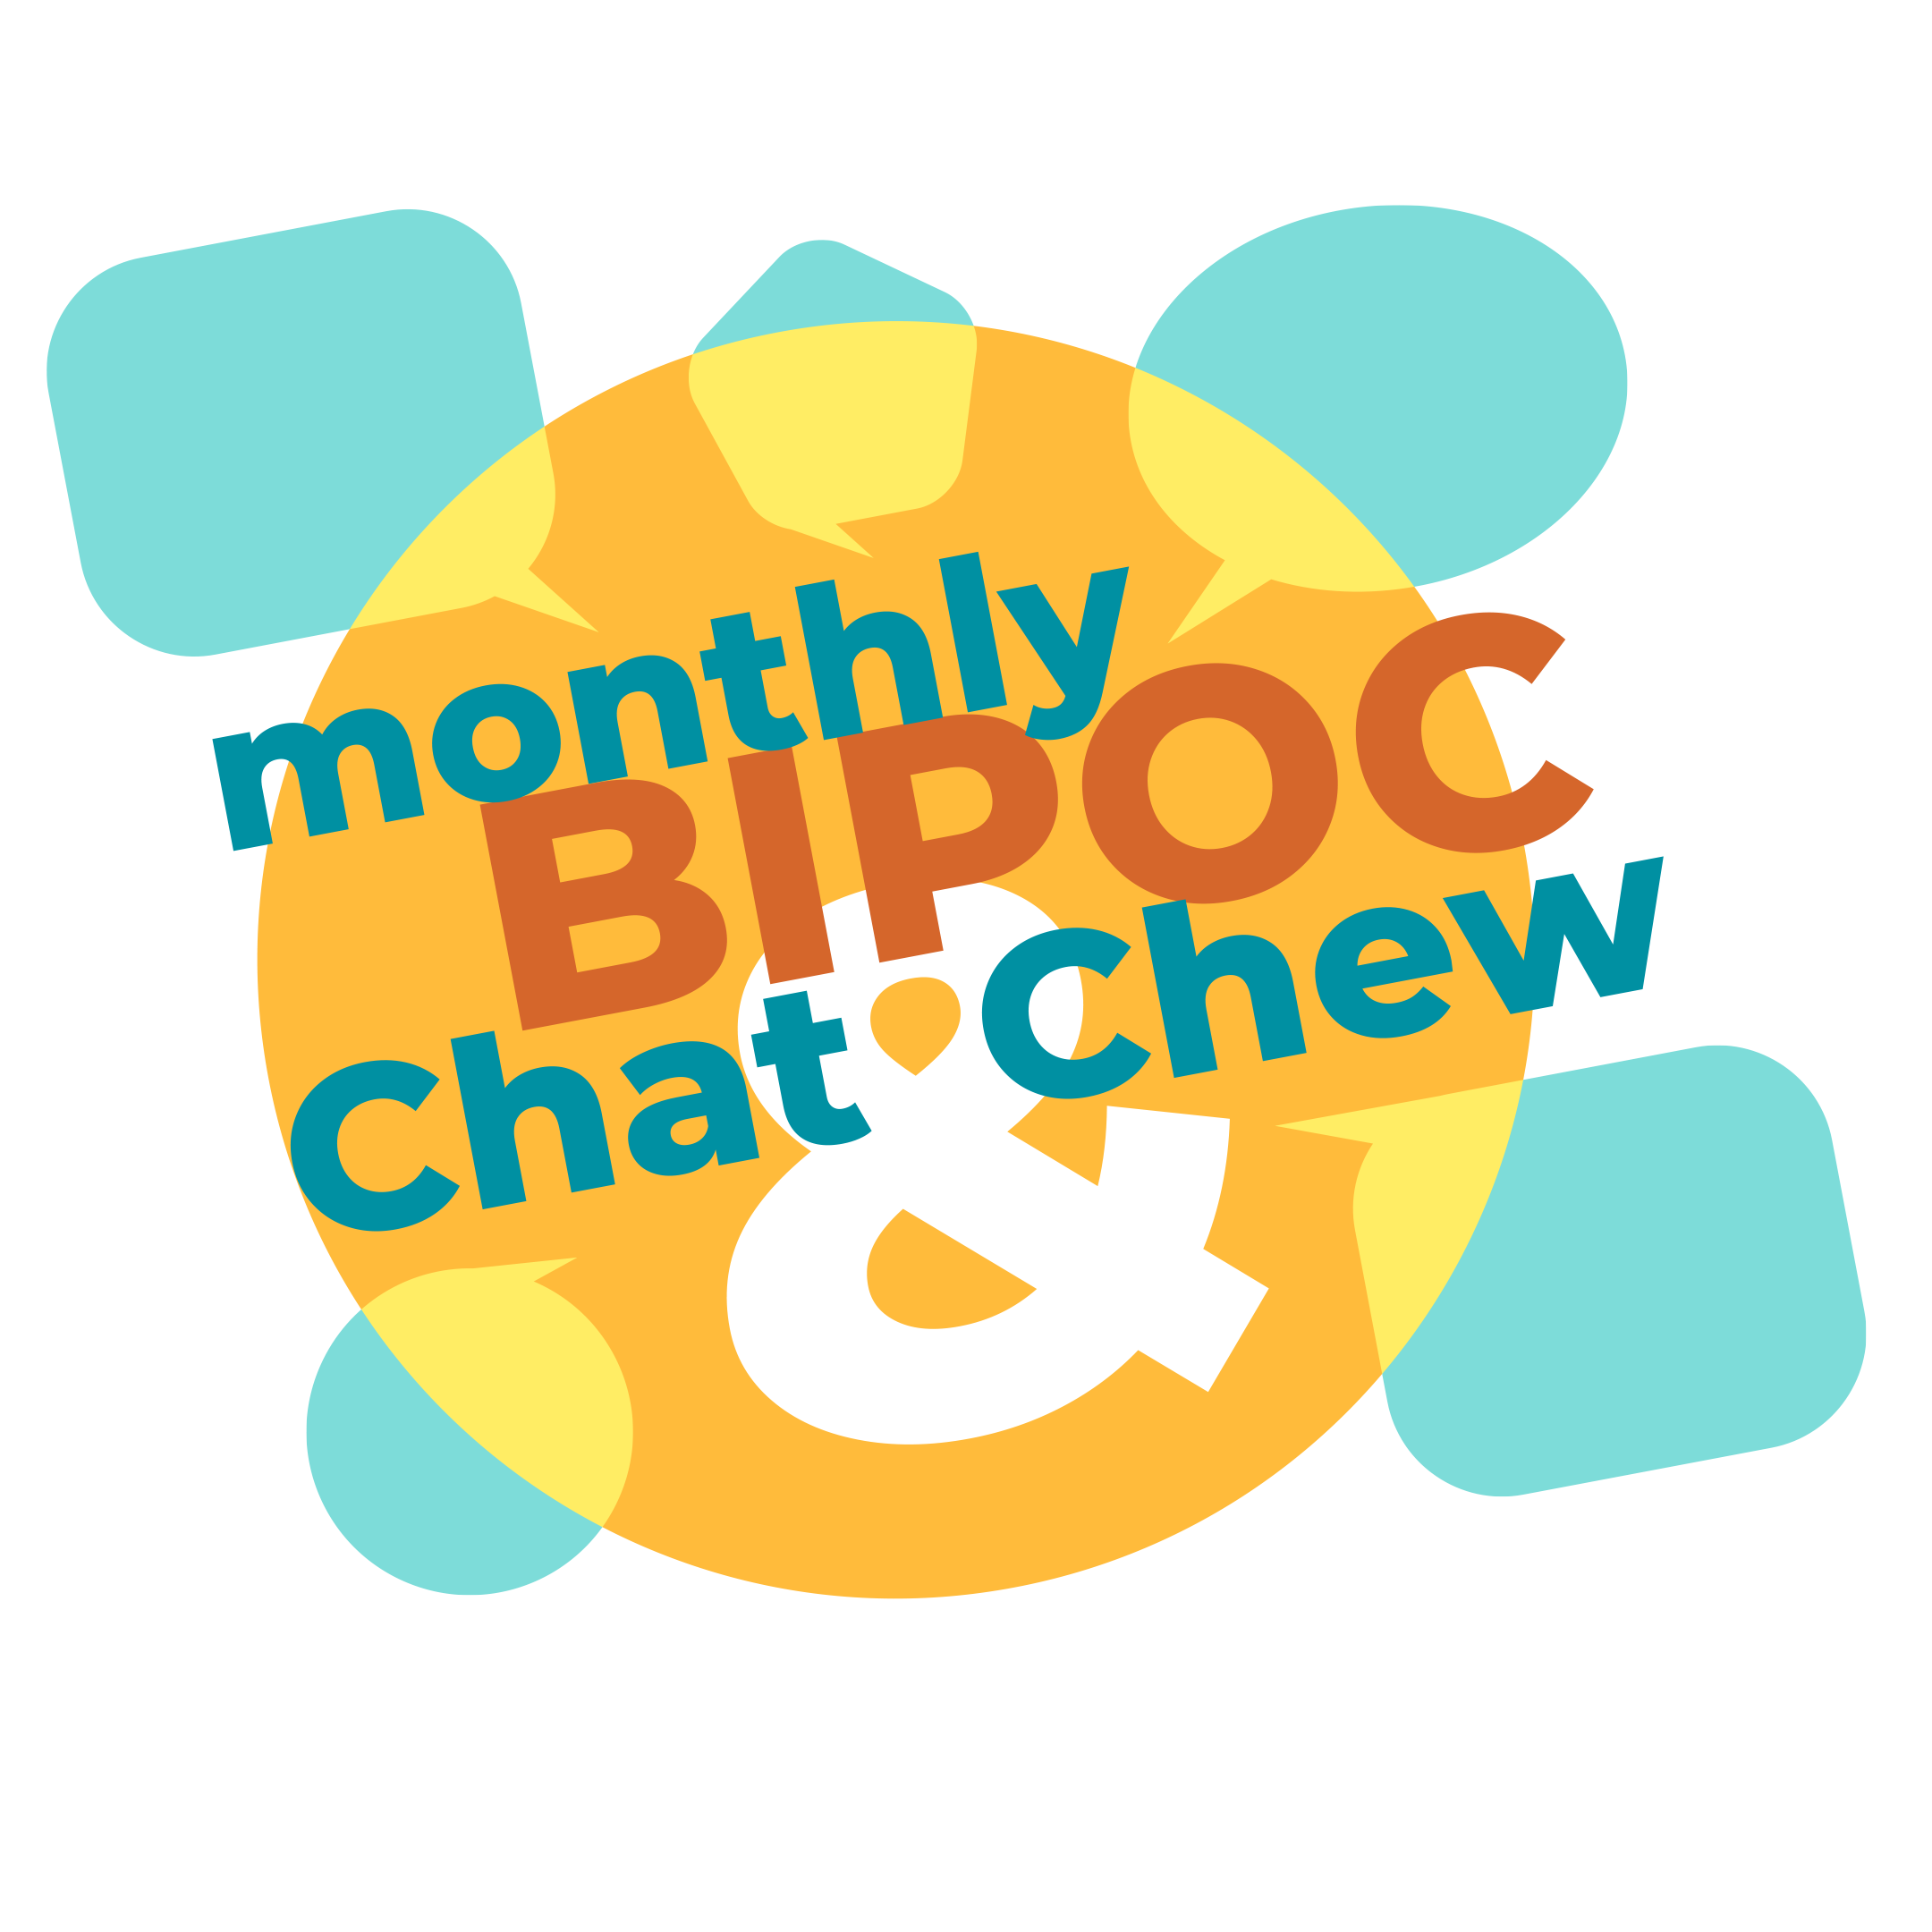 chat & chew logo